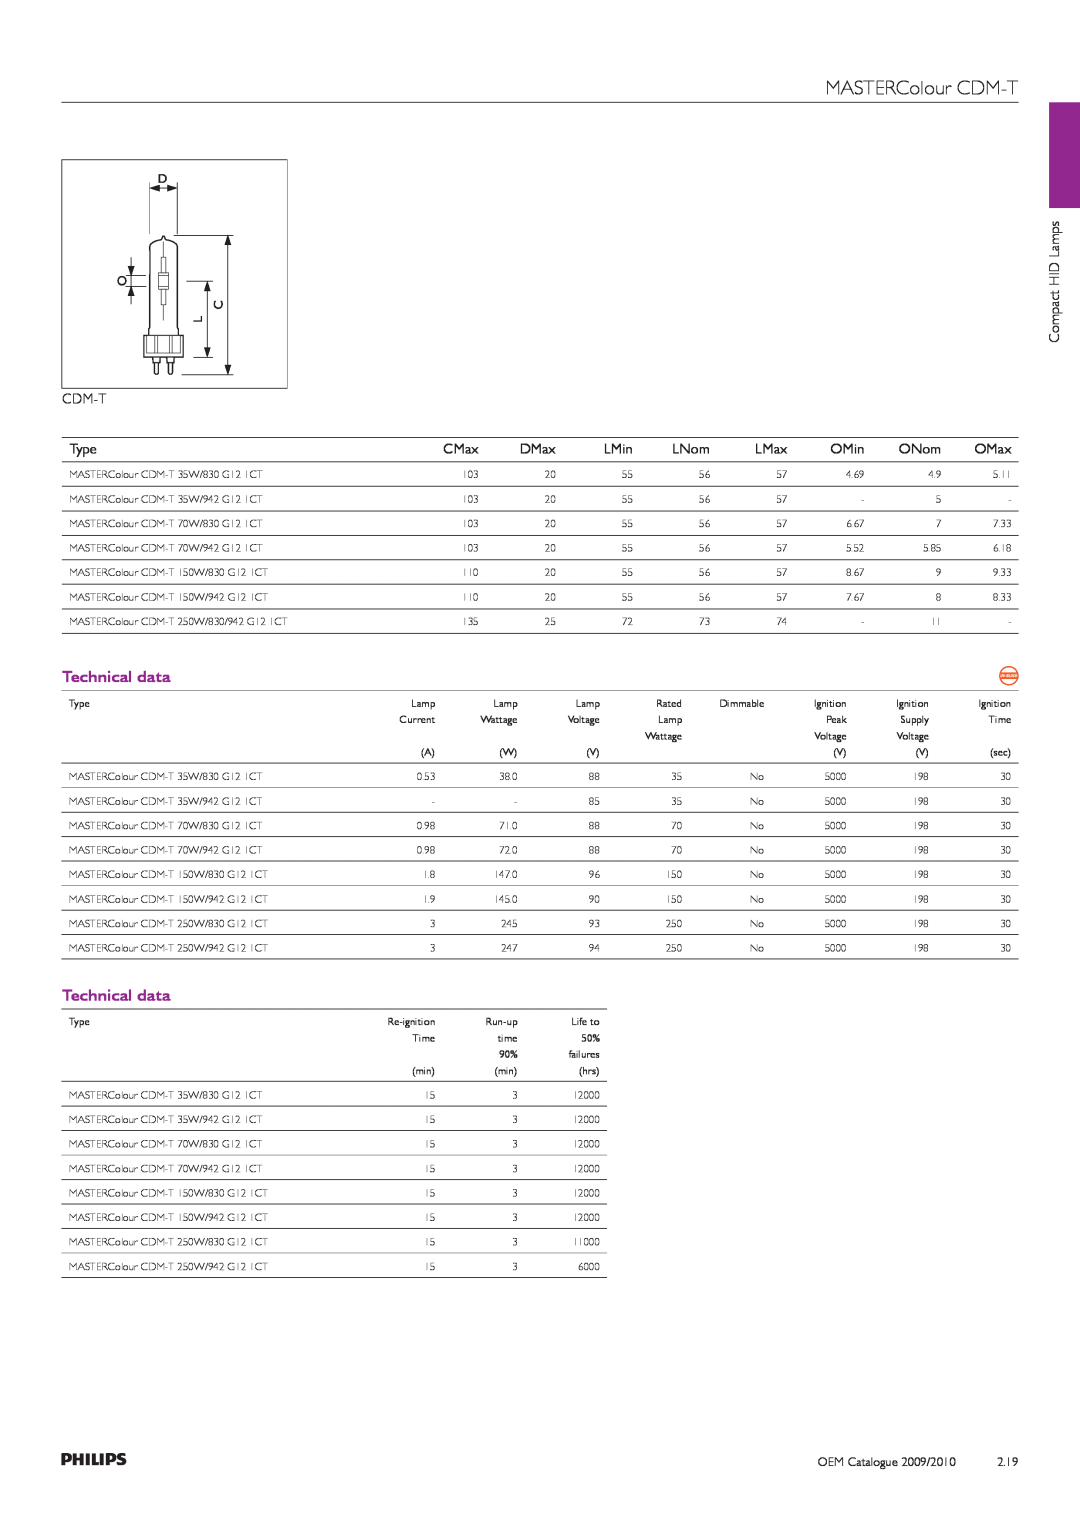 Philips Compact HID Lamp and Gear manual MASTERColour CDM-T, Technical data, D O C L, OEM Catalogue 2009/2010, 2.19 